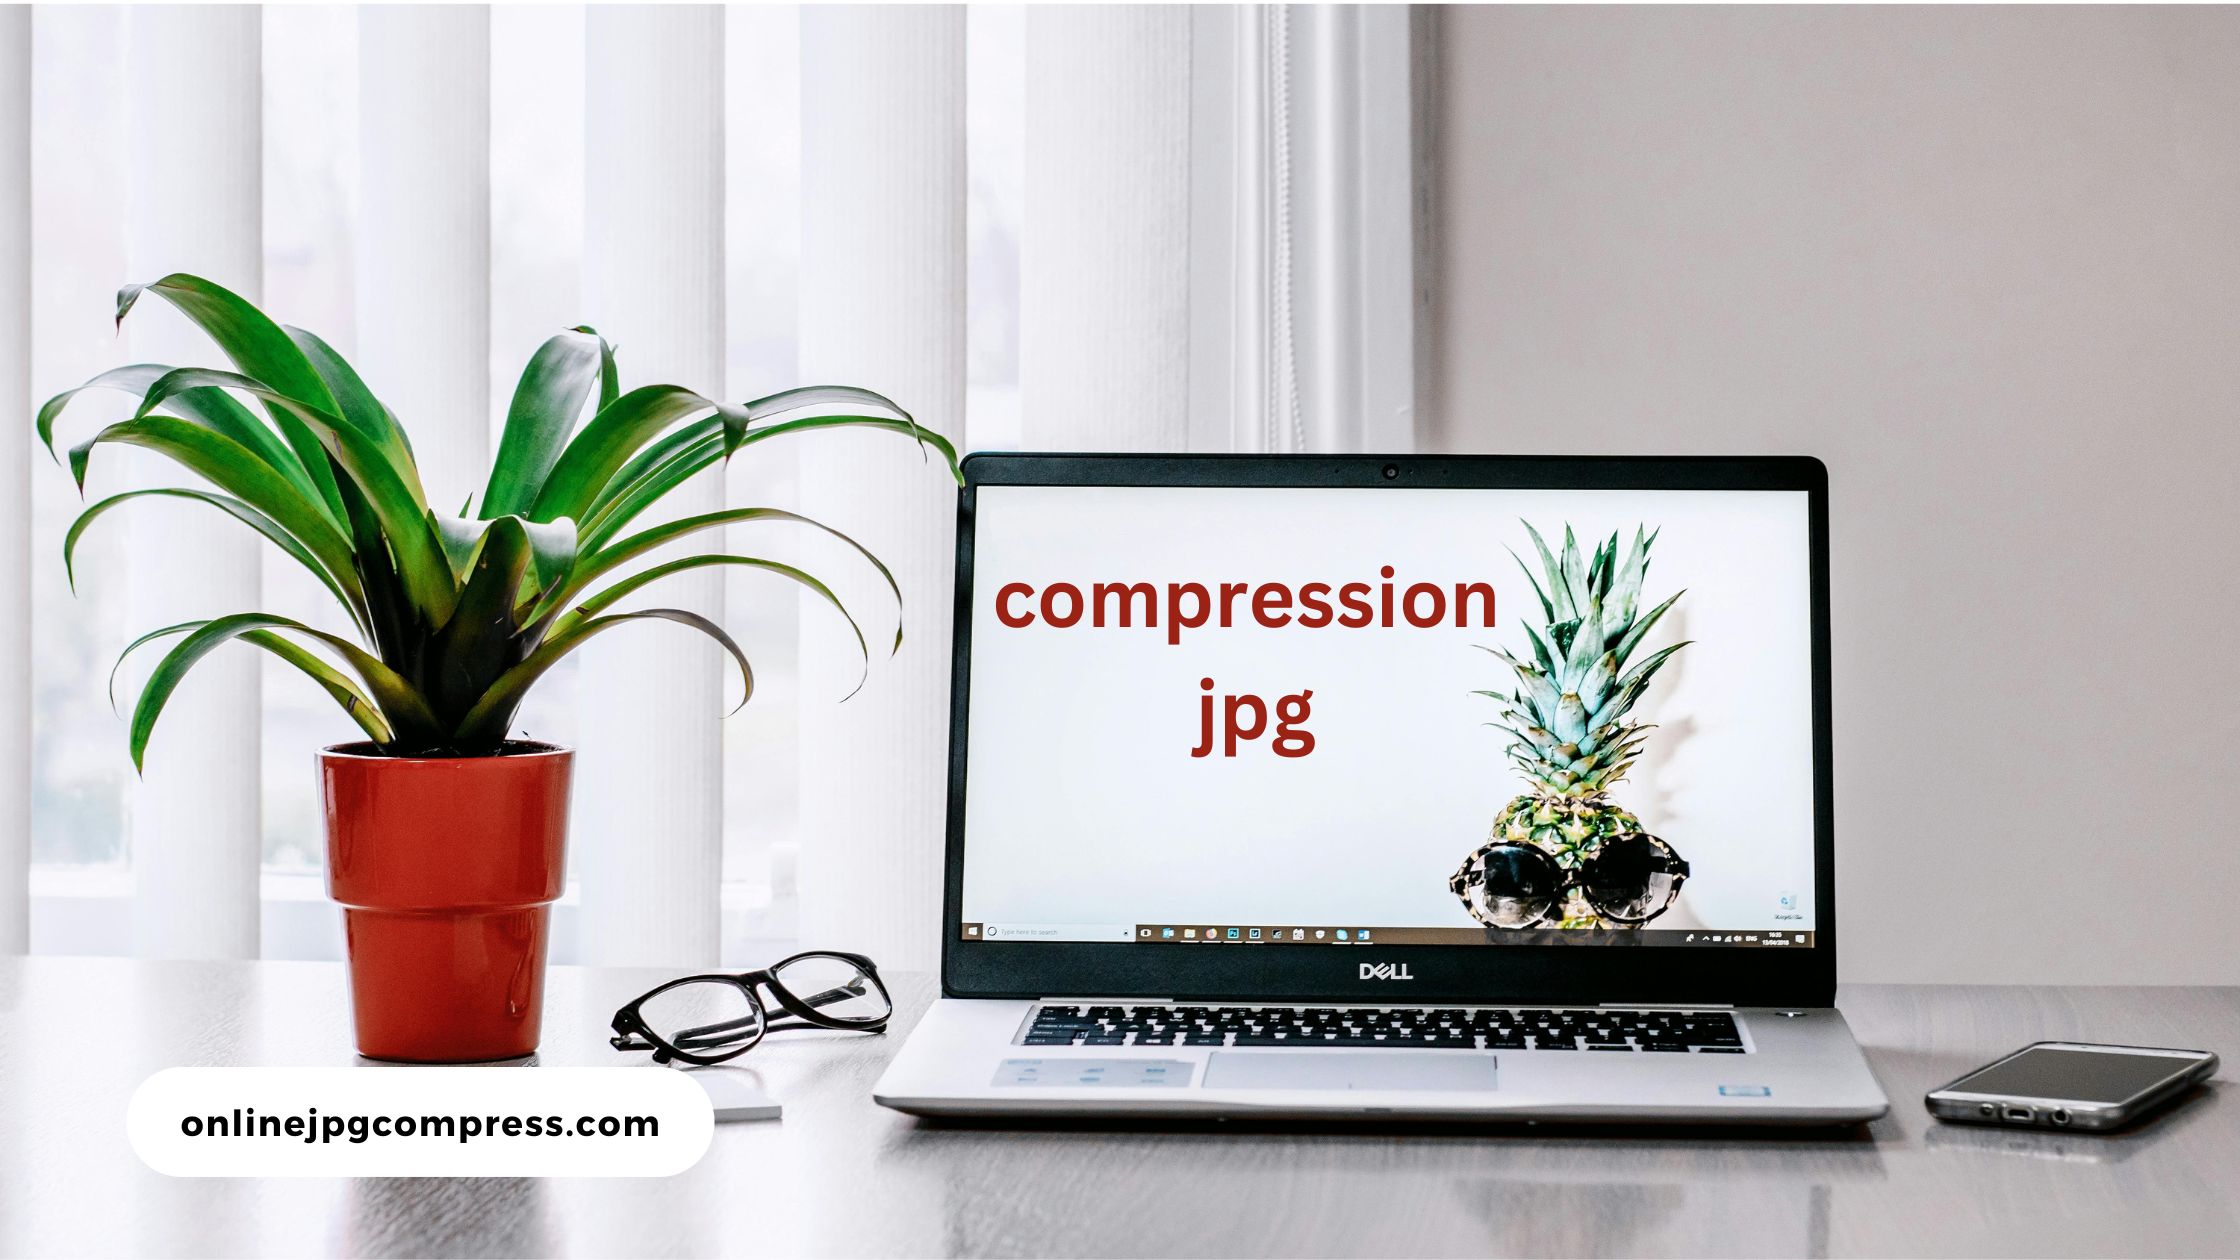 compression jpg